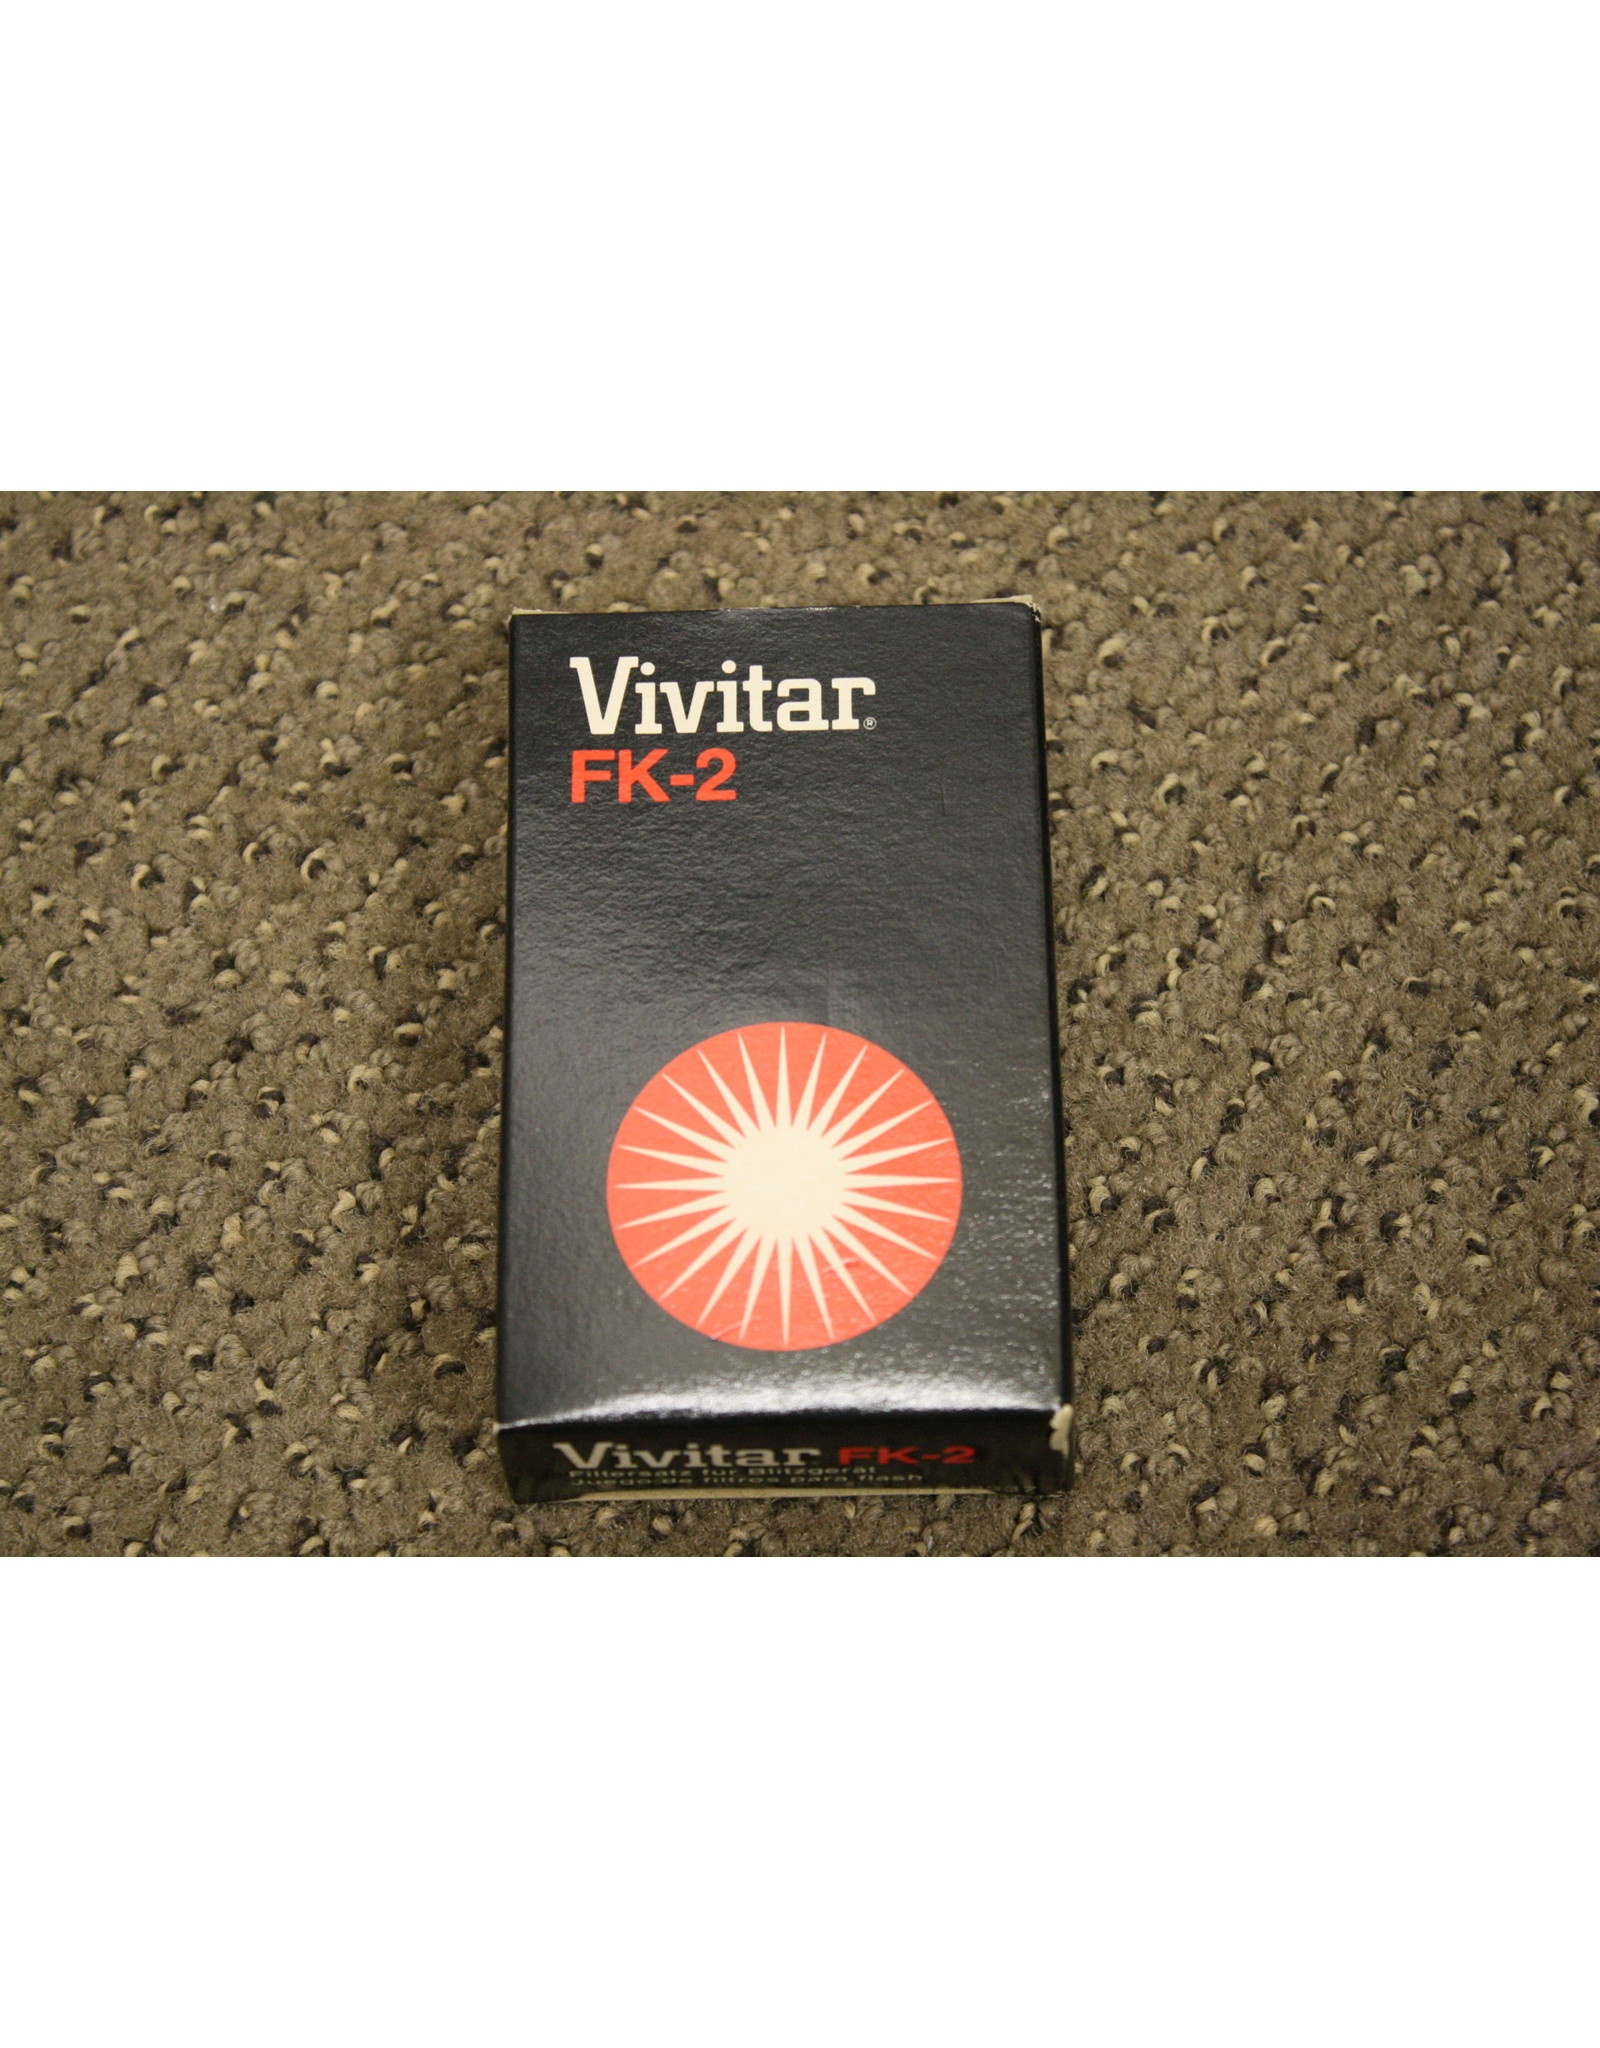 Vivitar FK-2 filter flash kit (Pre-owned)